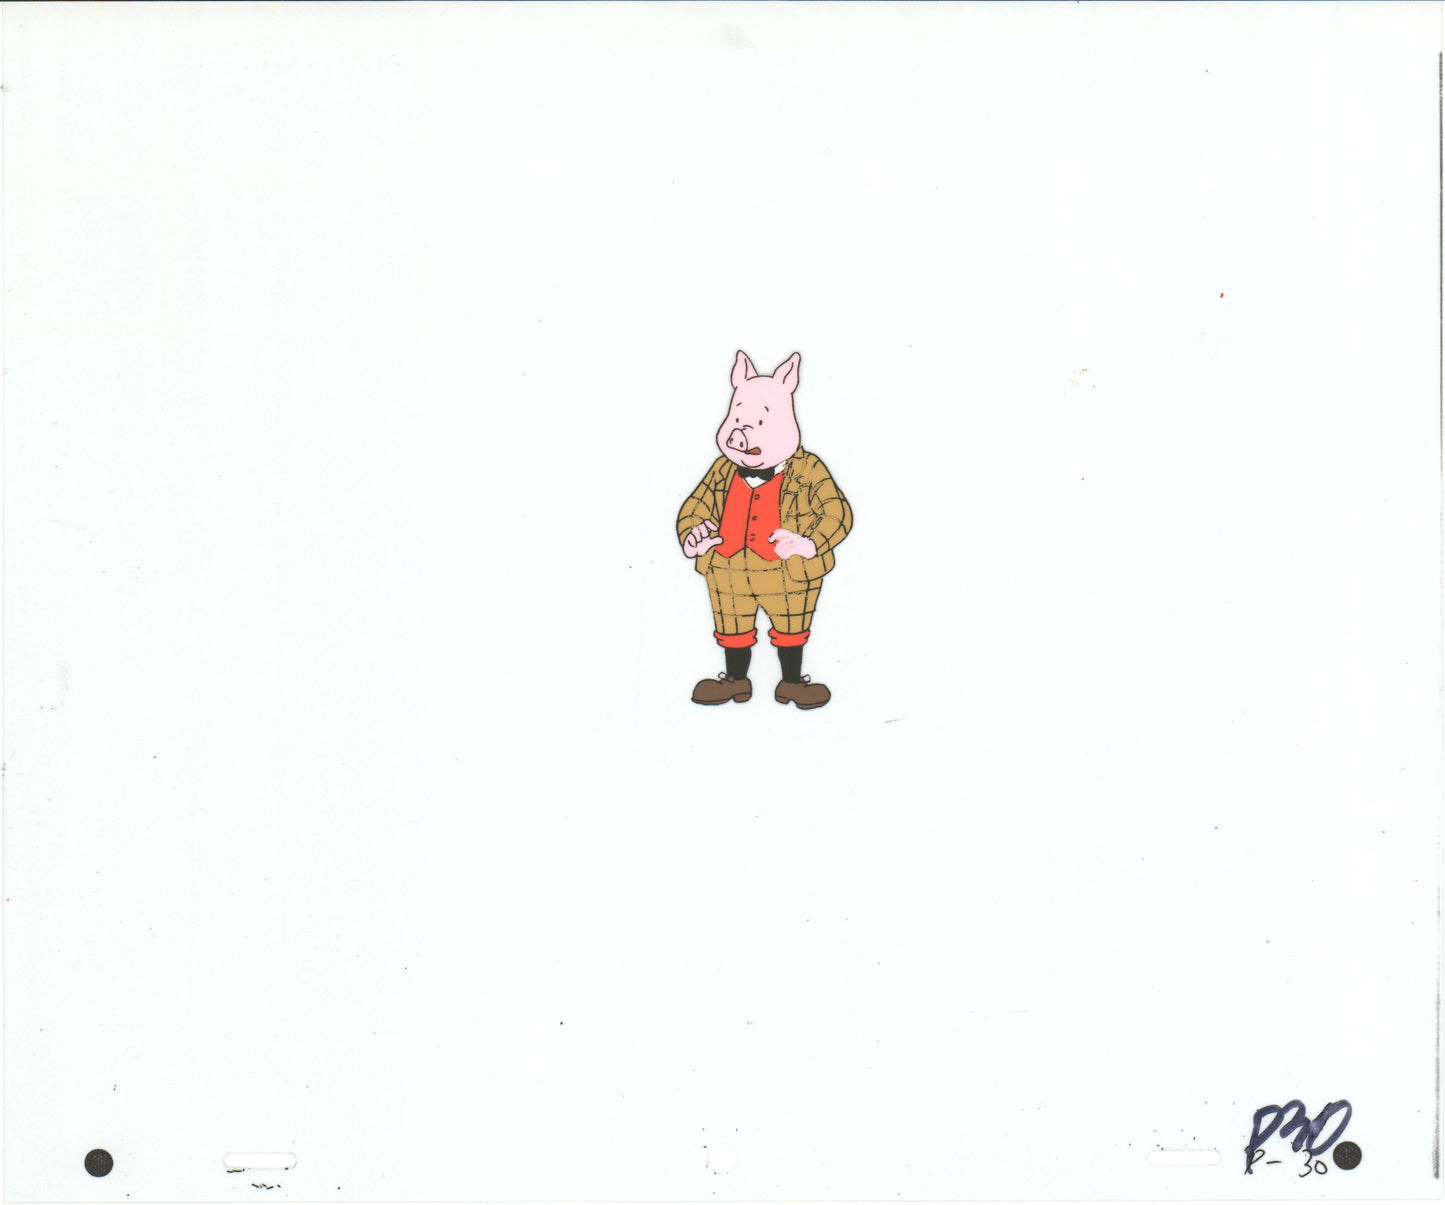 RUPERT Bear Podgy Pig Original Production Animation Cel from the Cartoon by Nelvana Tourtel Animation 1990s 8-328